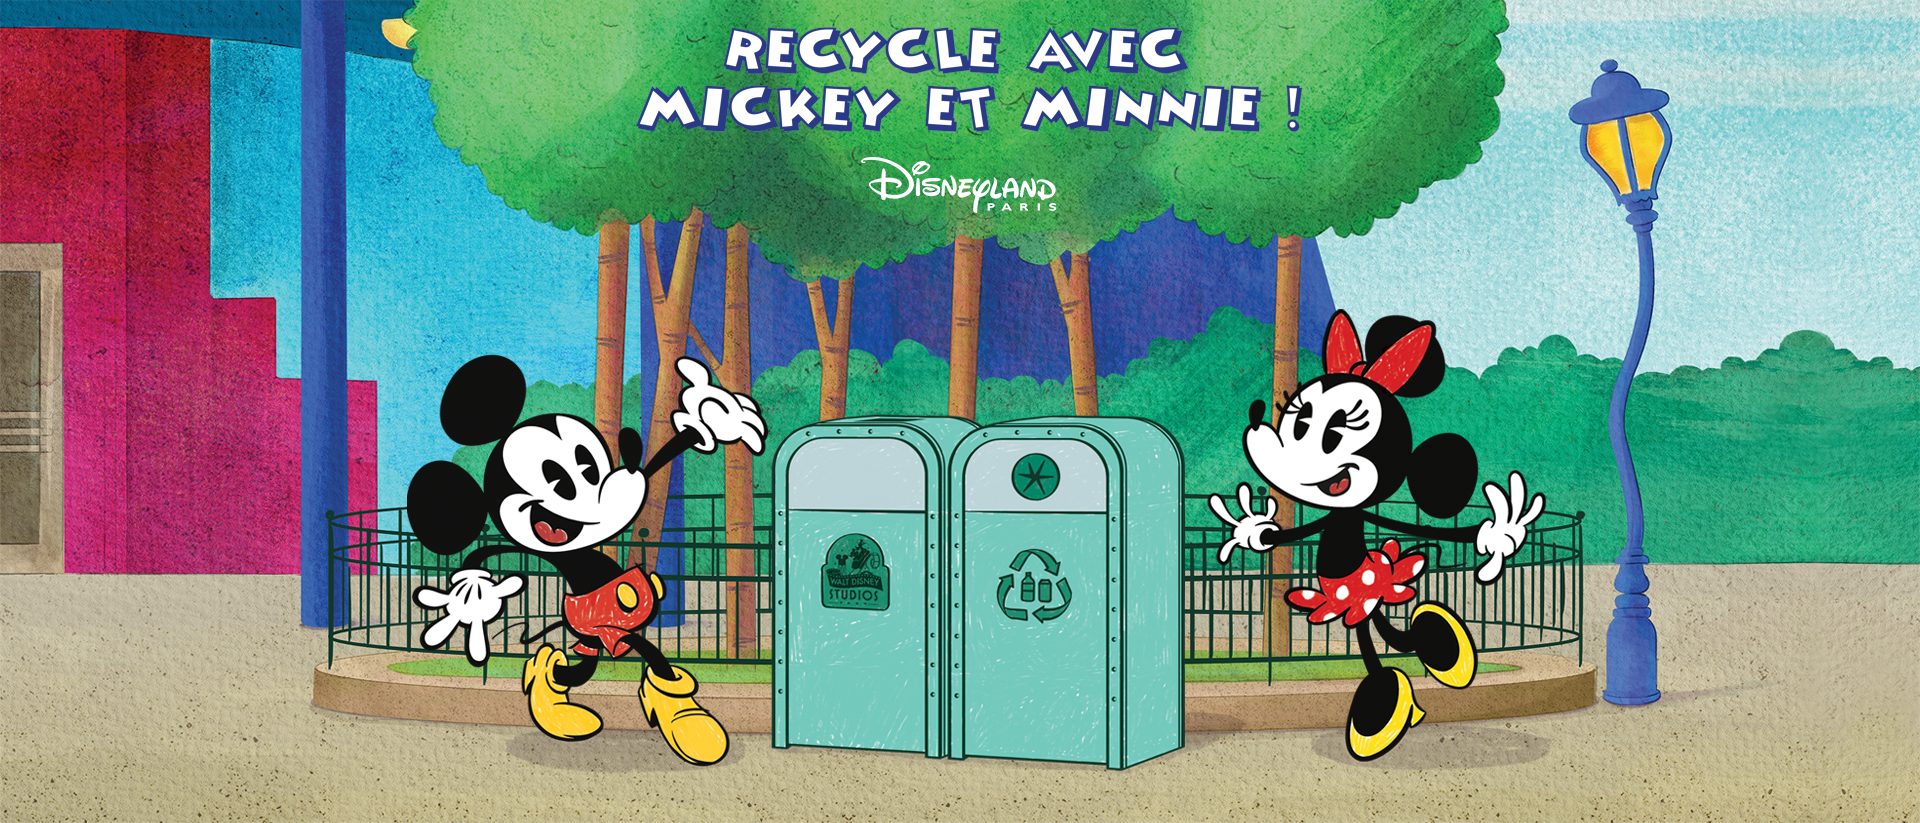 banner disneyland paris wakatoon recycle avec mickey et minnie